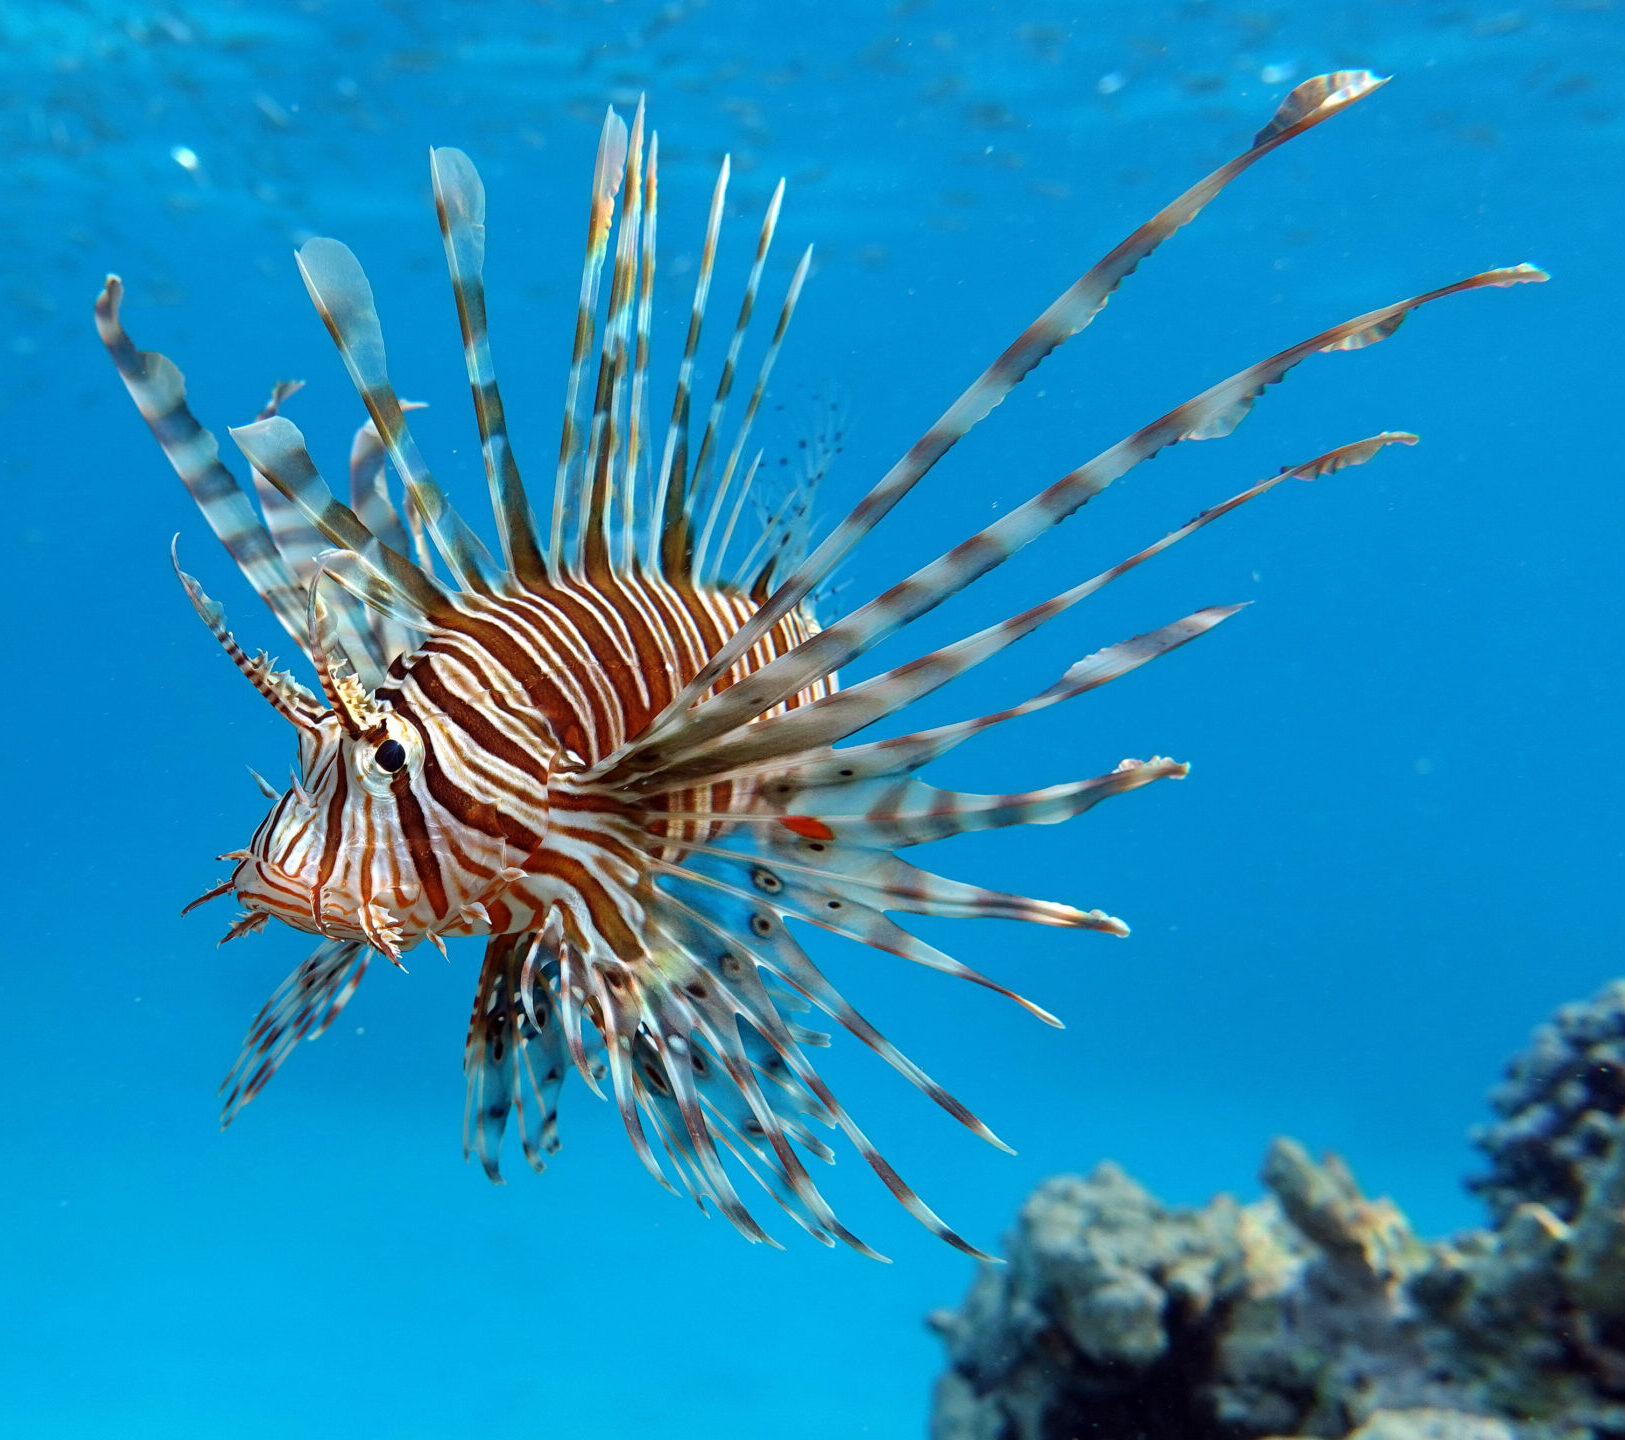 LIonfish are invasive in the Atlantic Ocean.